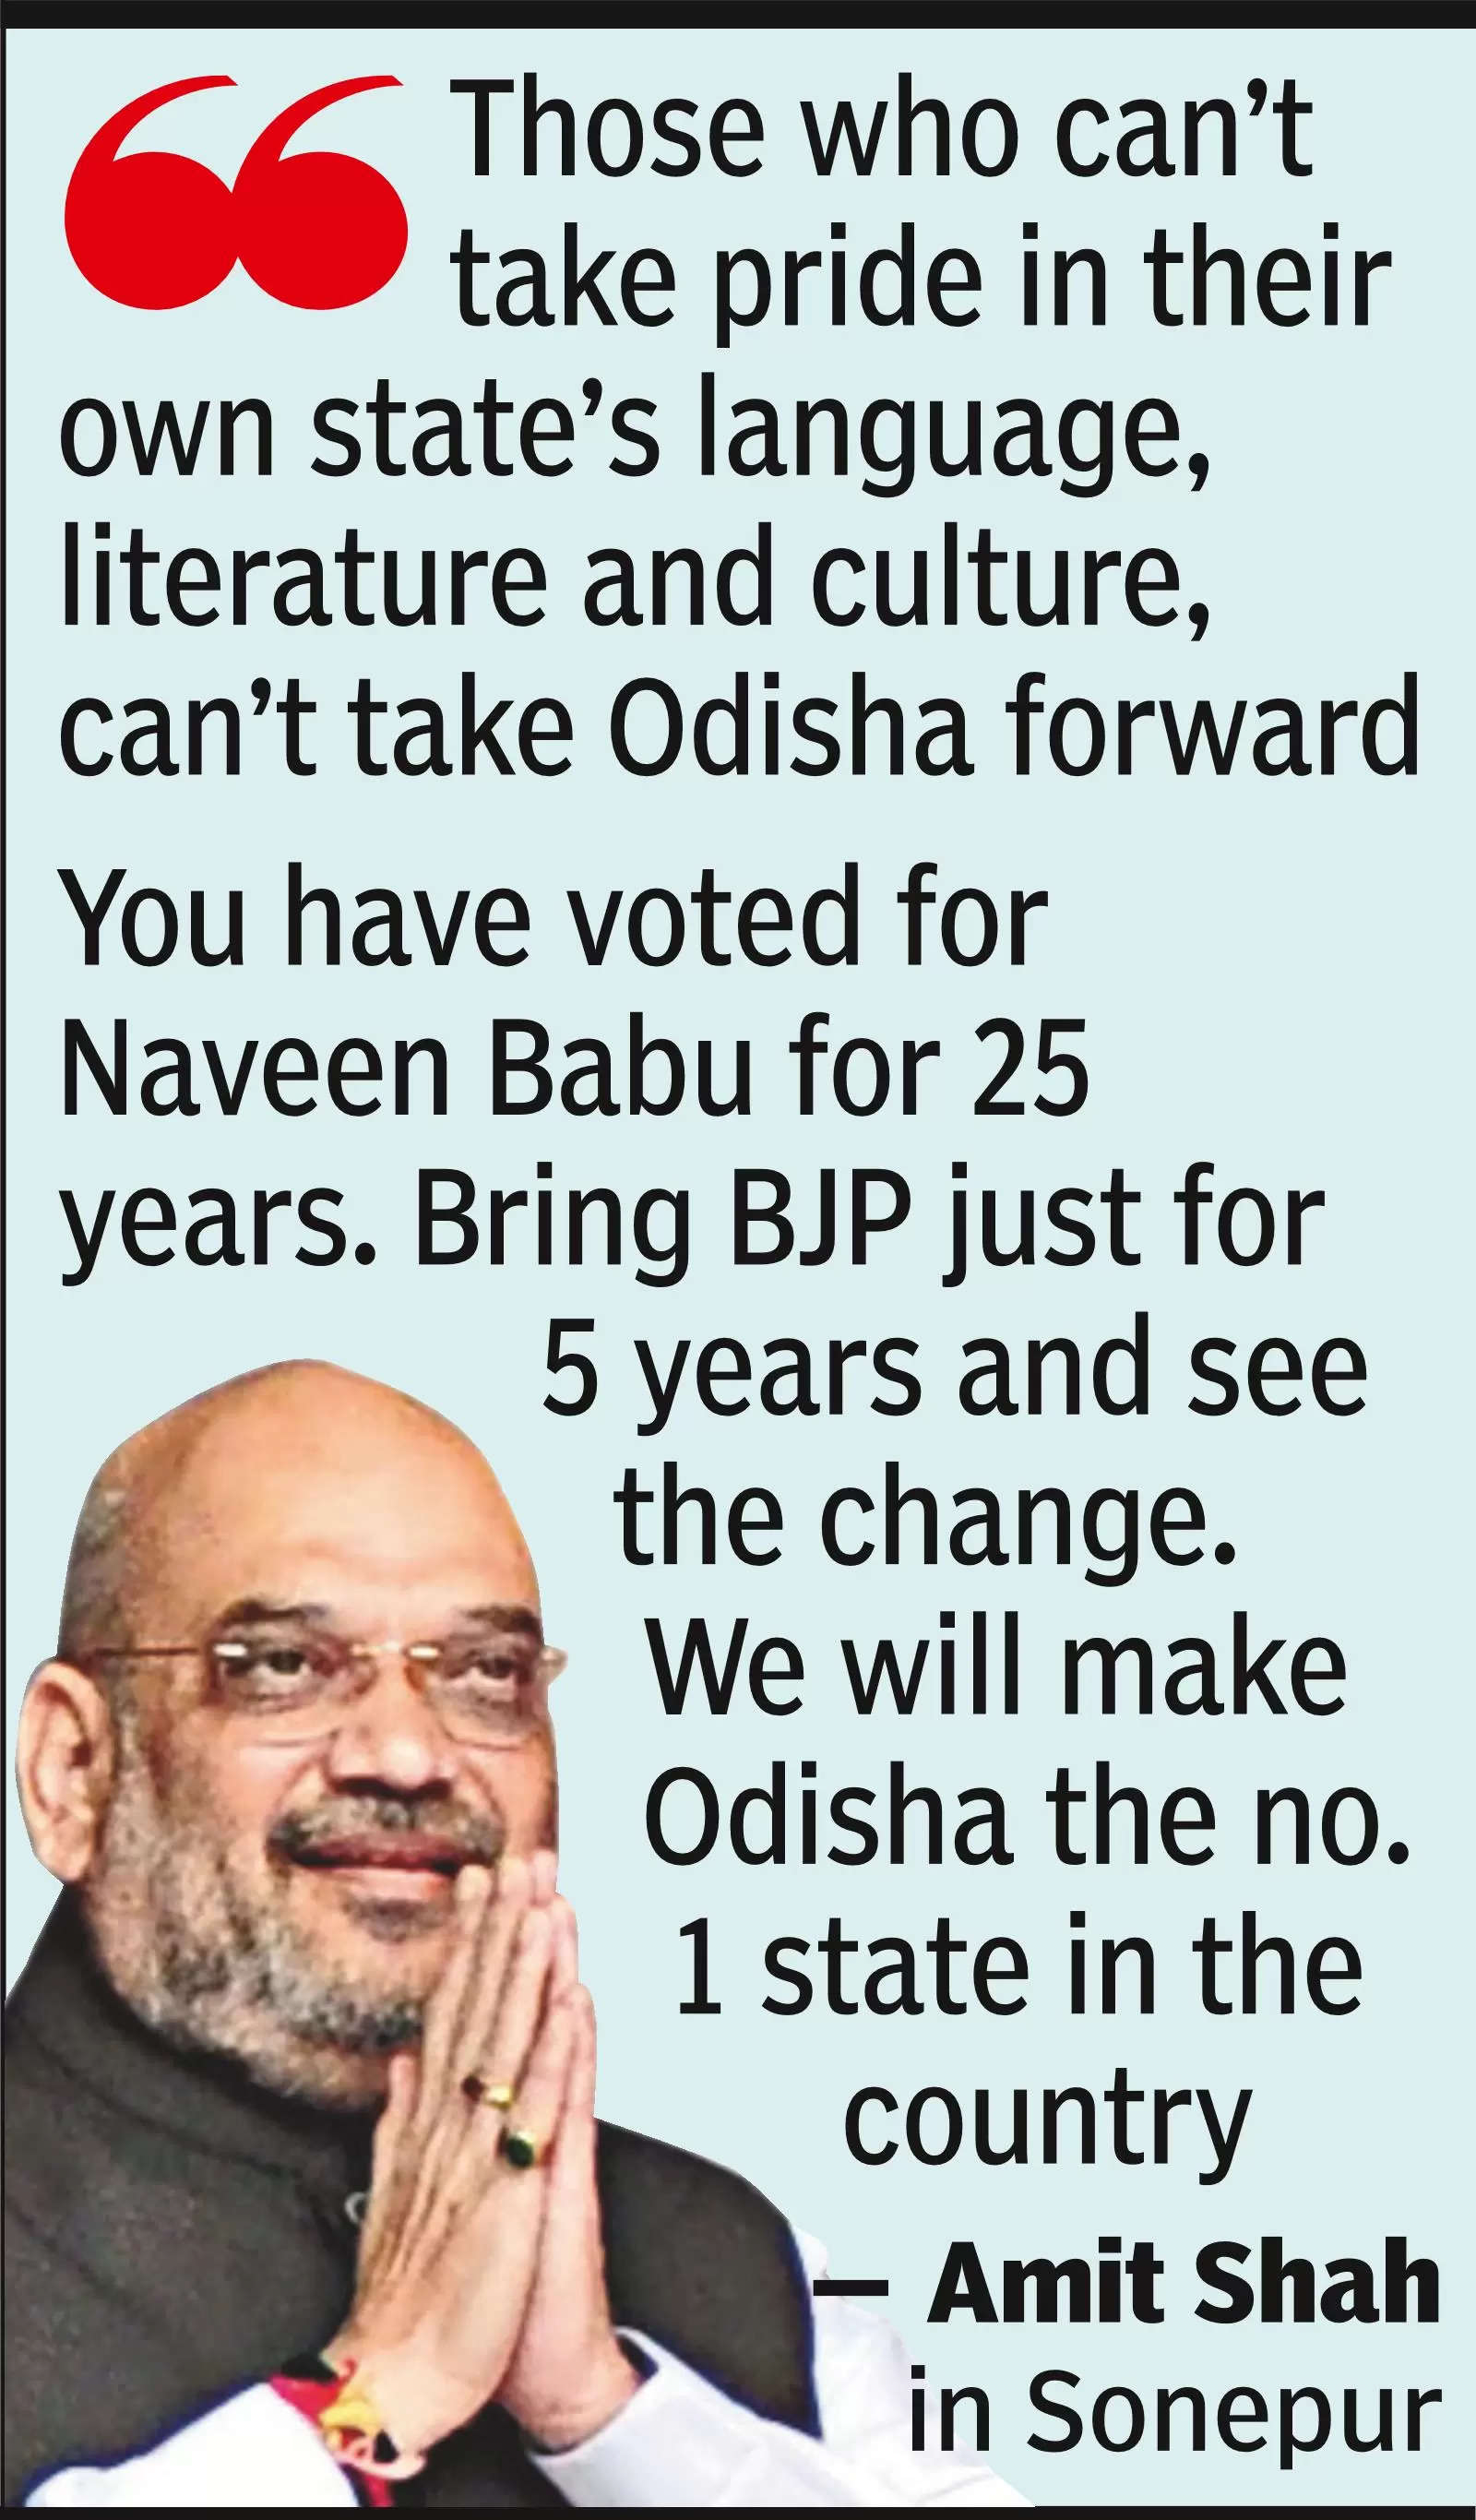 amit shah targets naveen government, calls his tenure odisha’s ‘lost years’